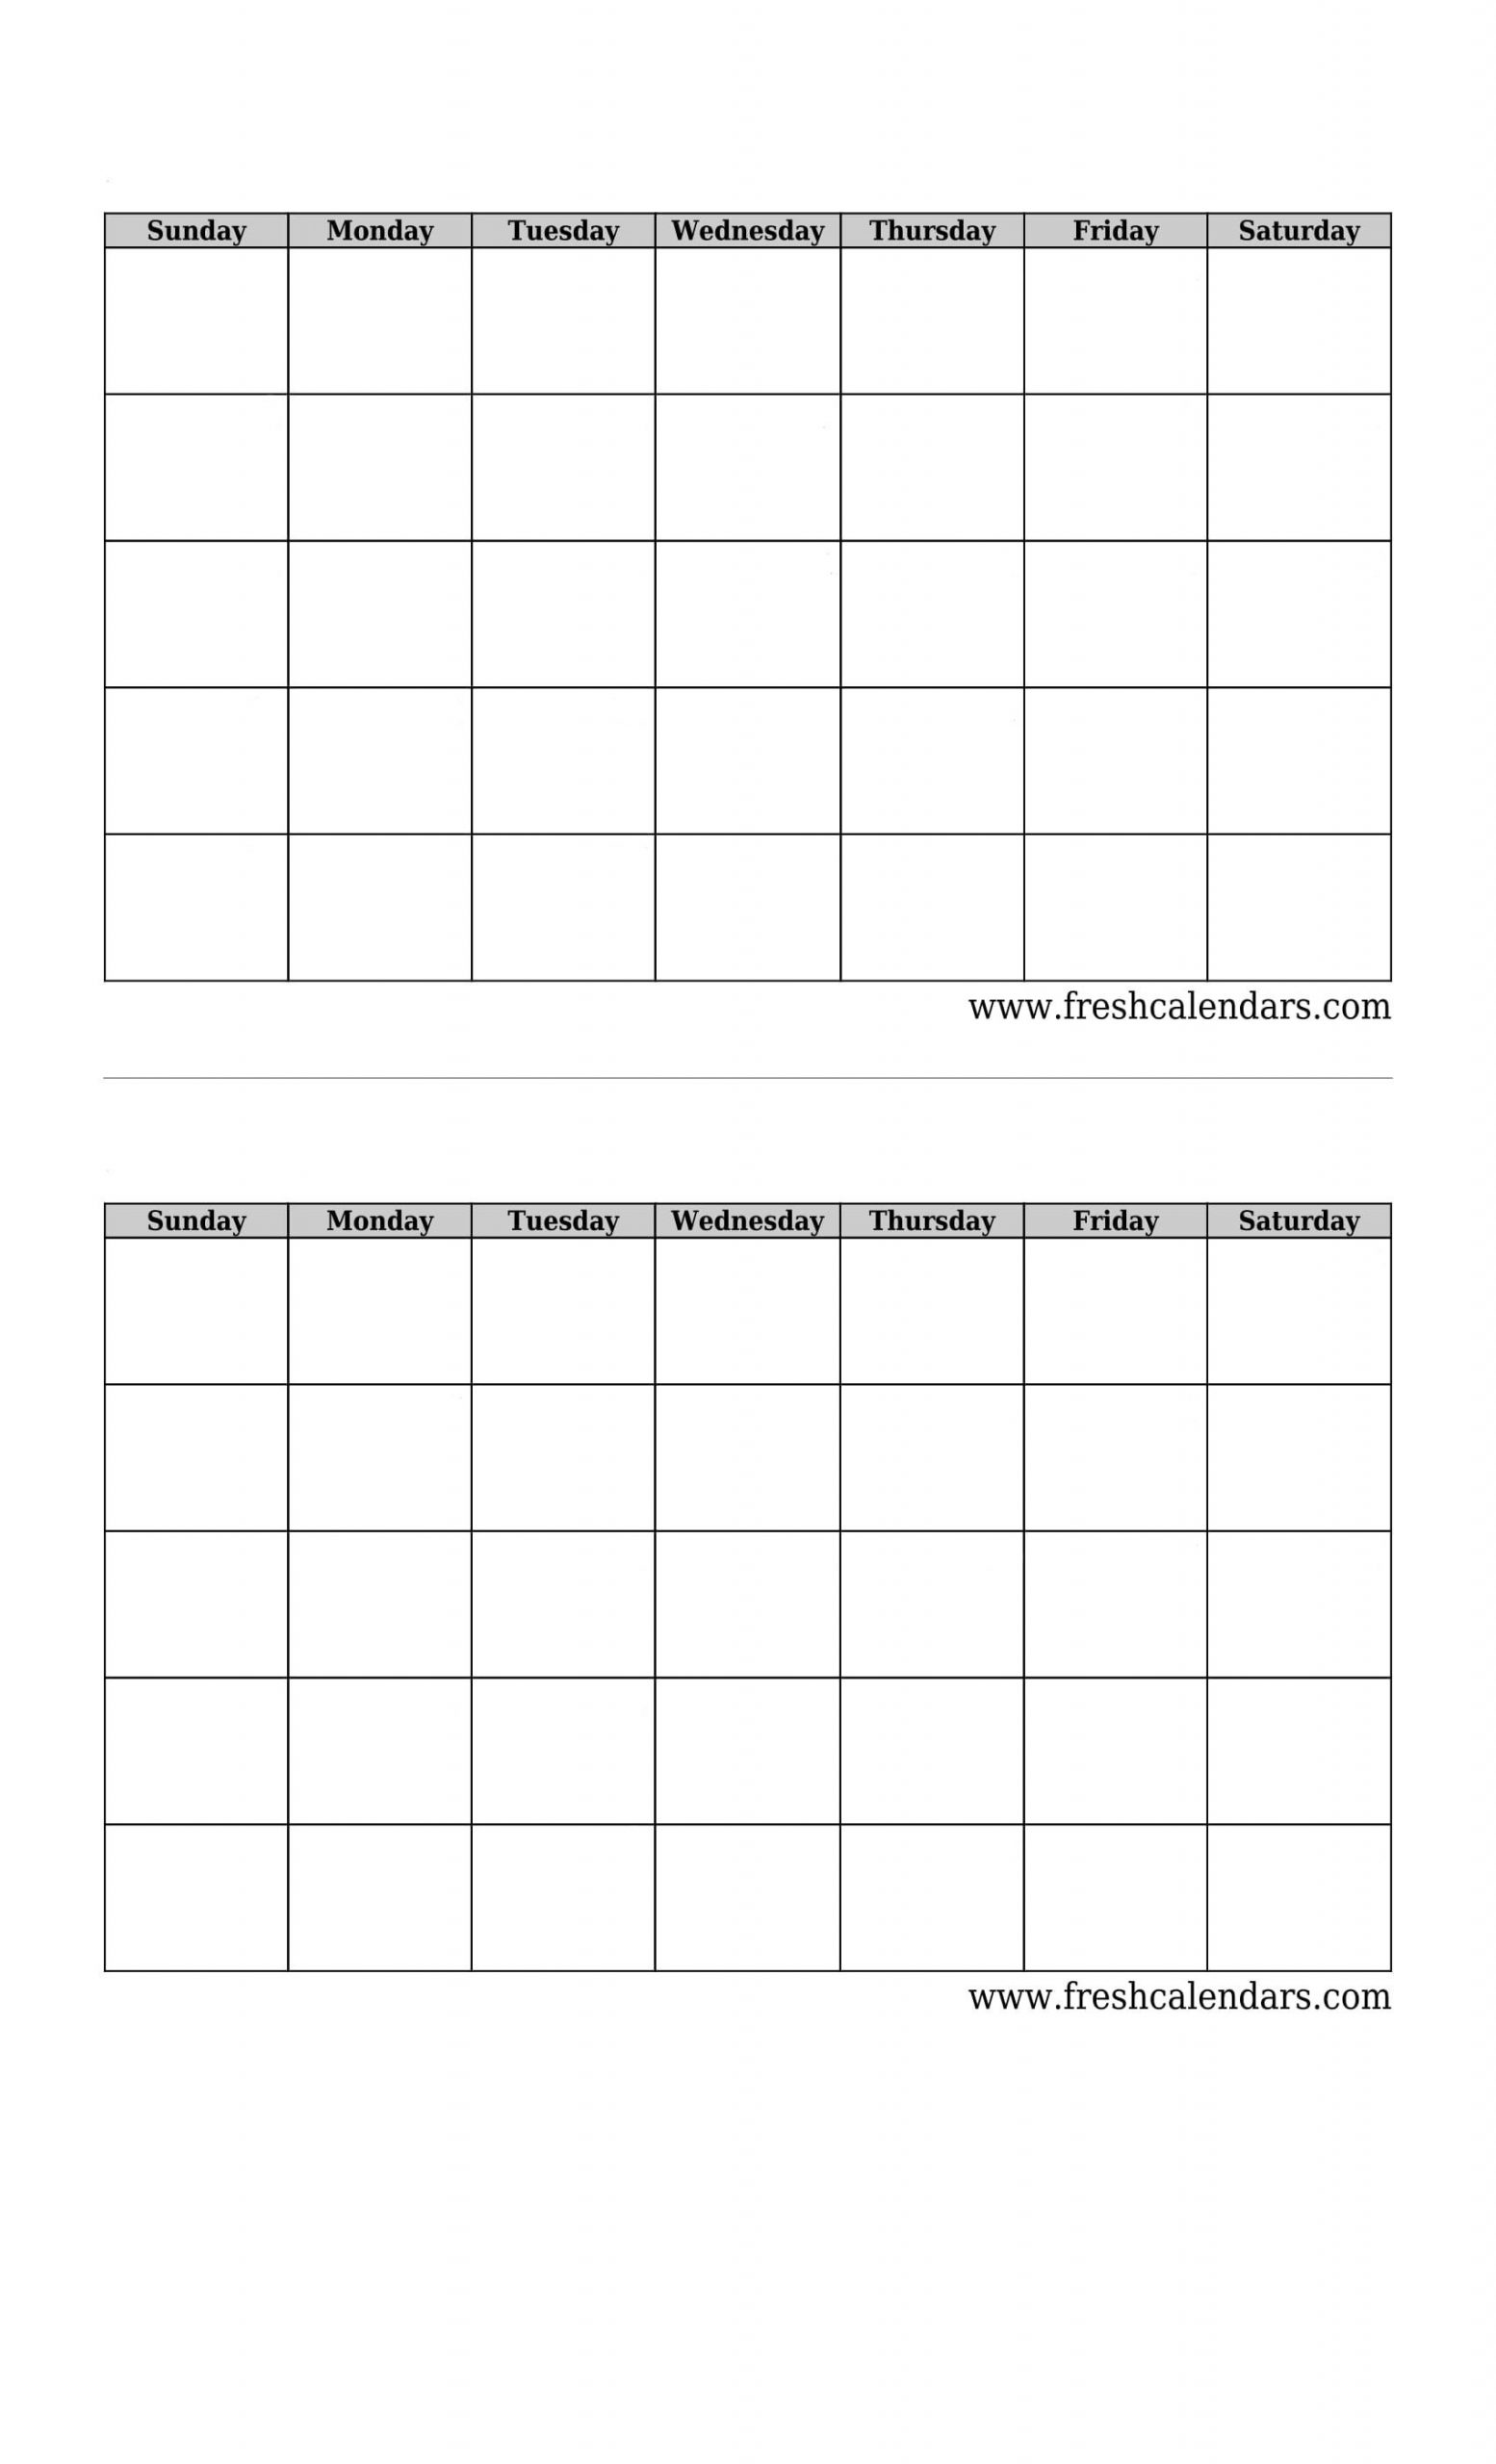 Blank Calendar Sunday Through Saturday | Calendar Printable Free-Sunday Through Saturday Calendar